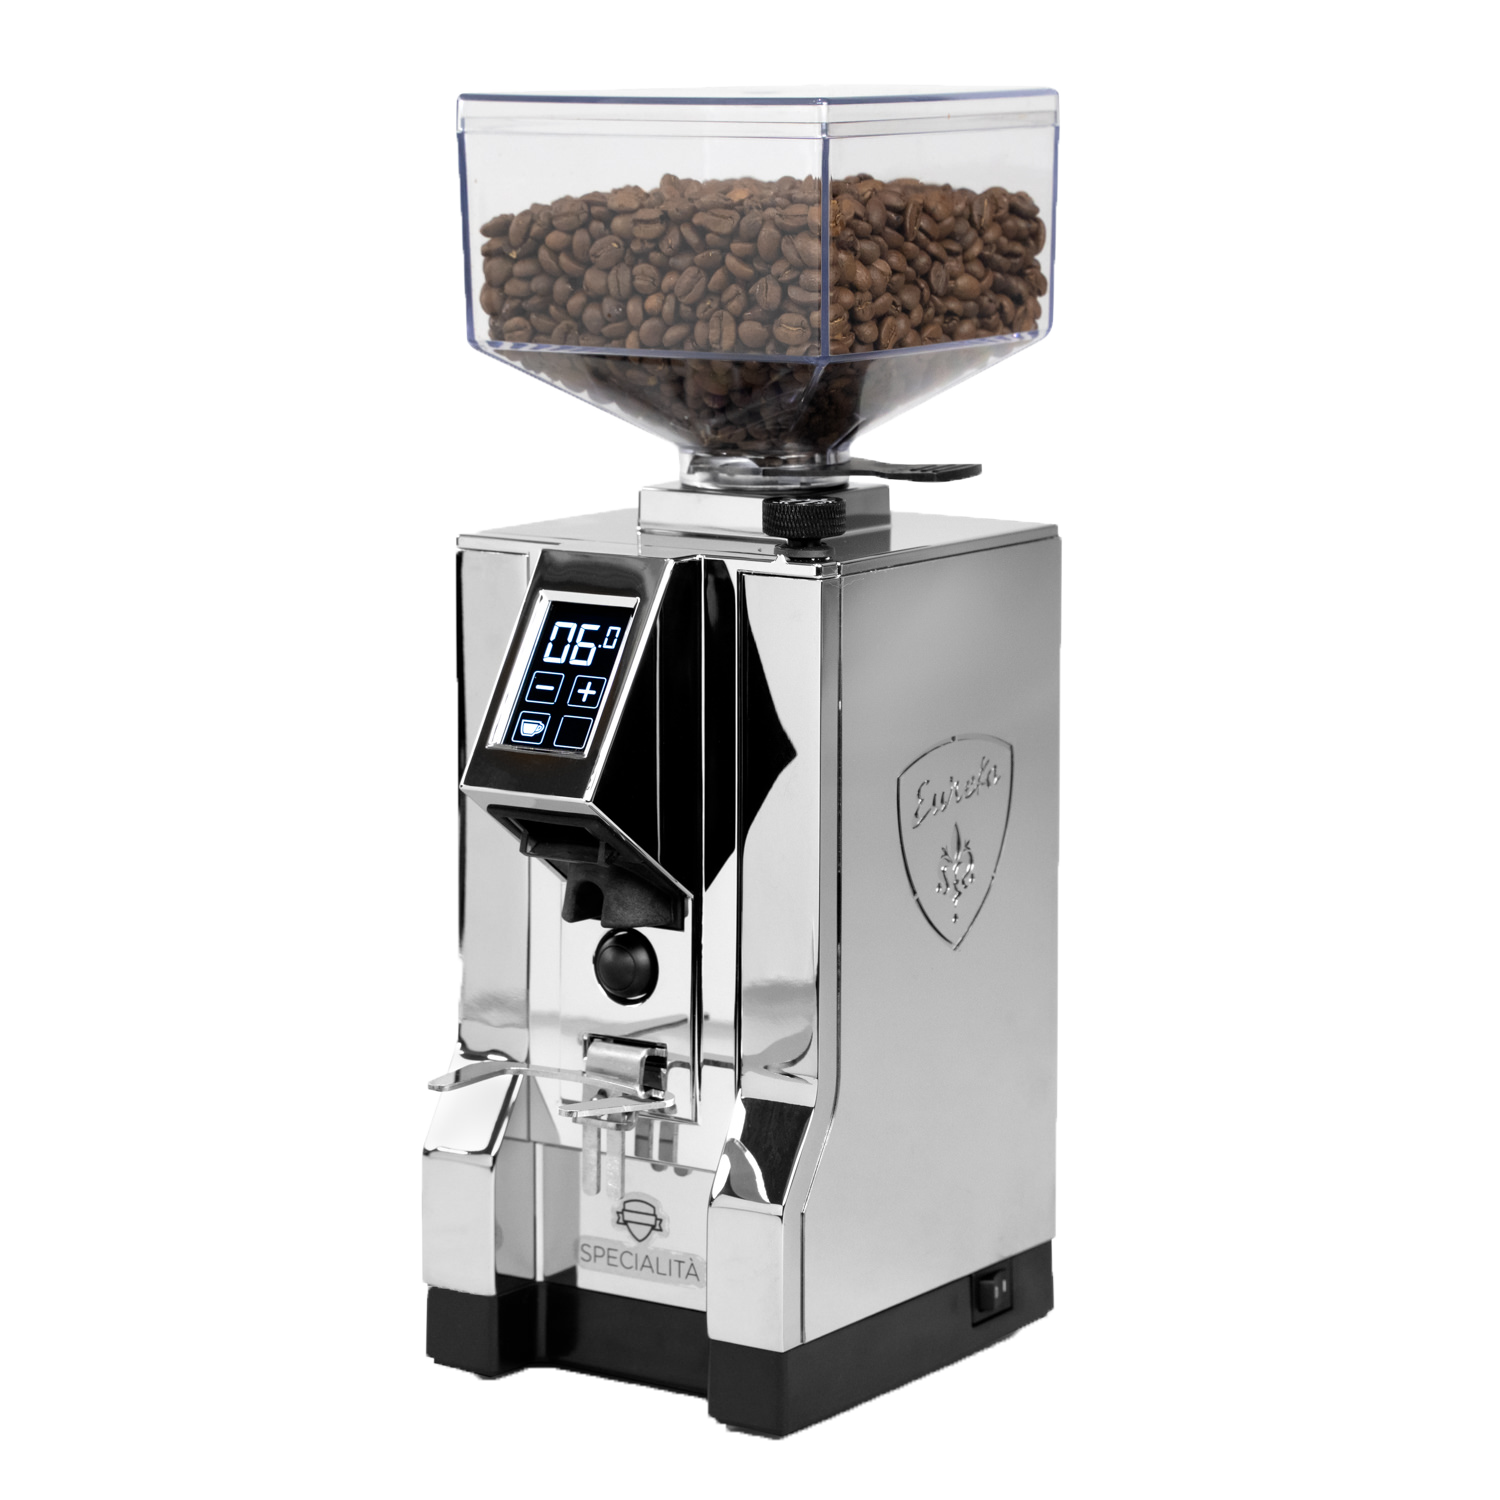 NEW - The Eureka Mignon Zero Low Retention Home Coffee Grinder